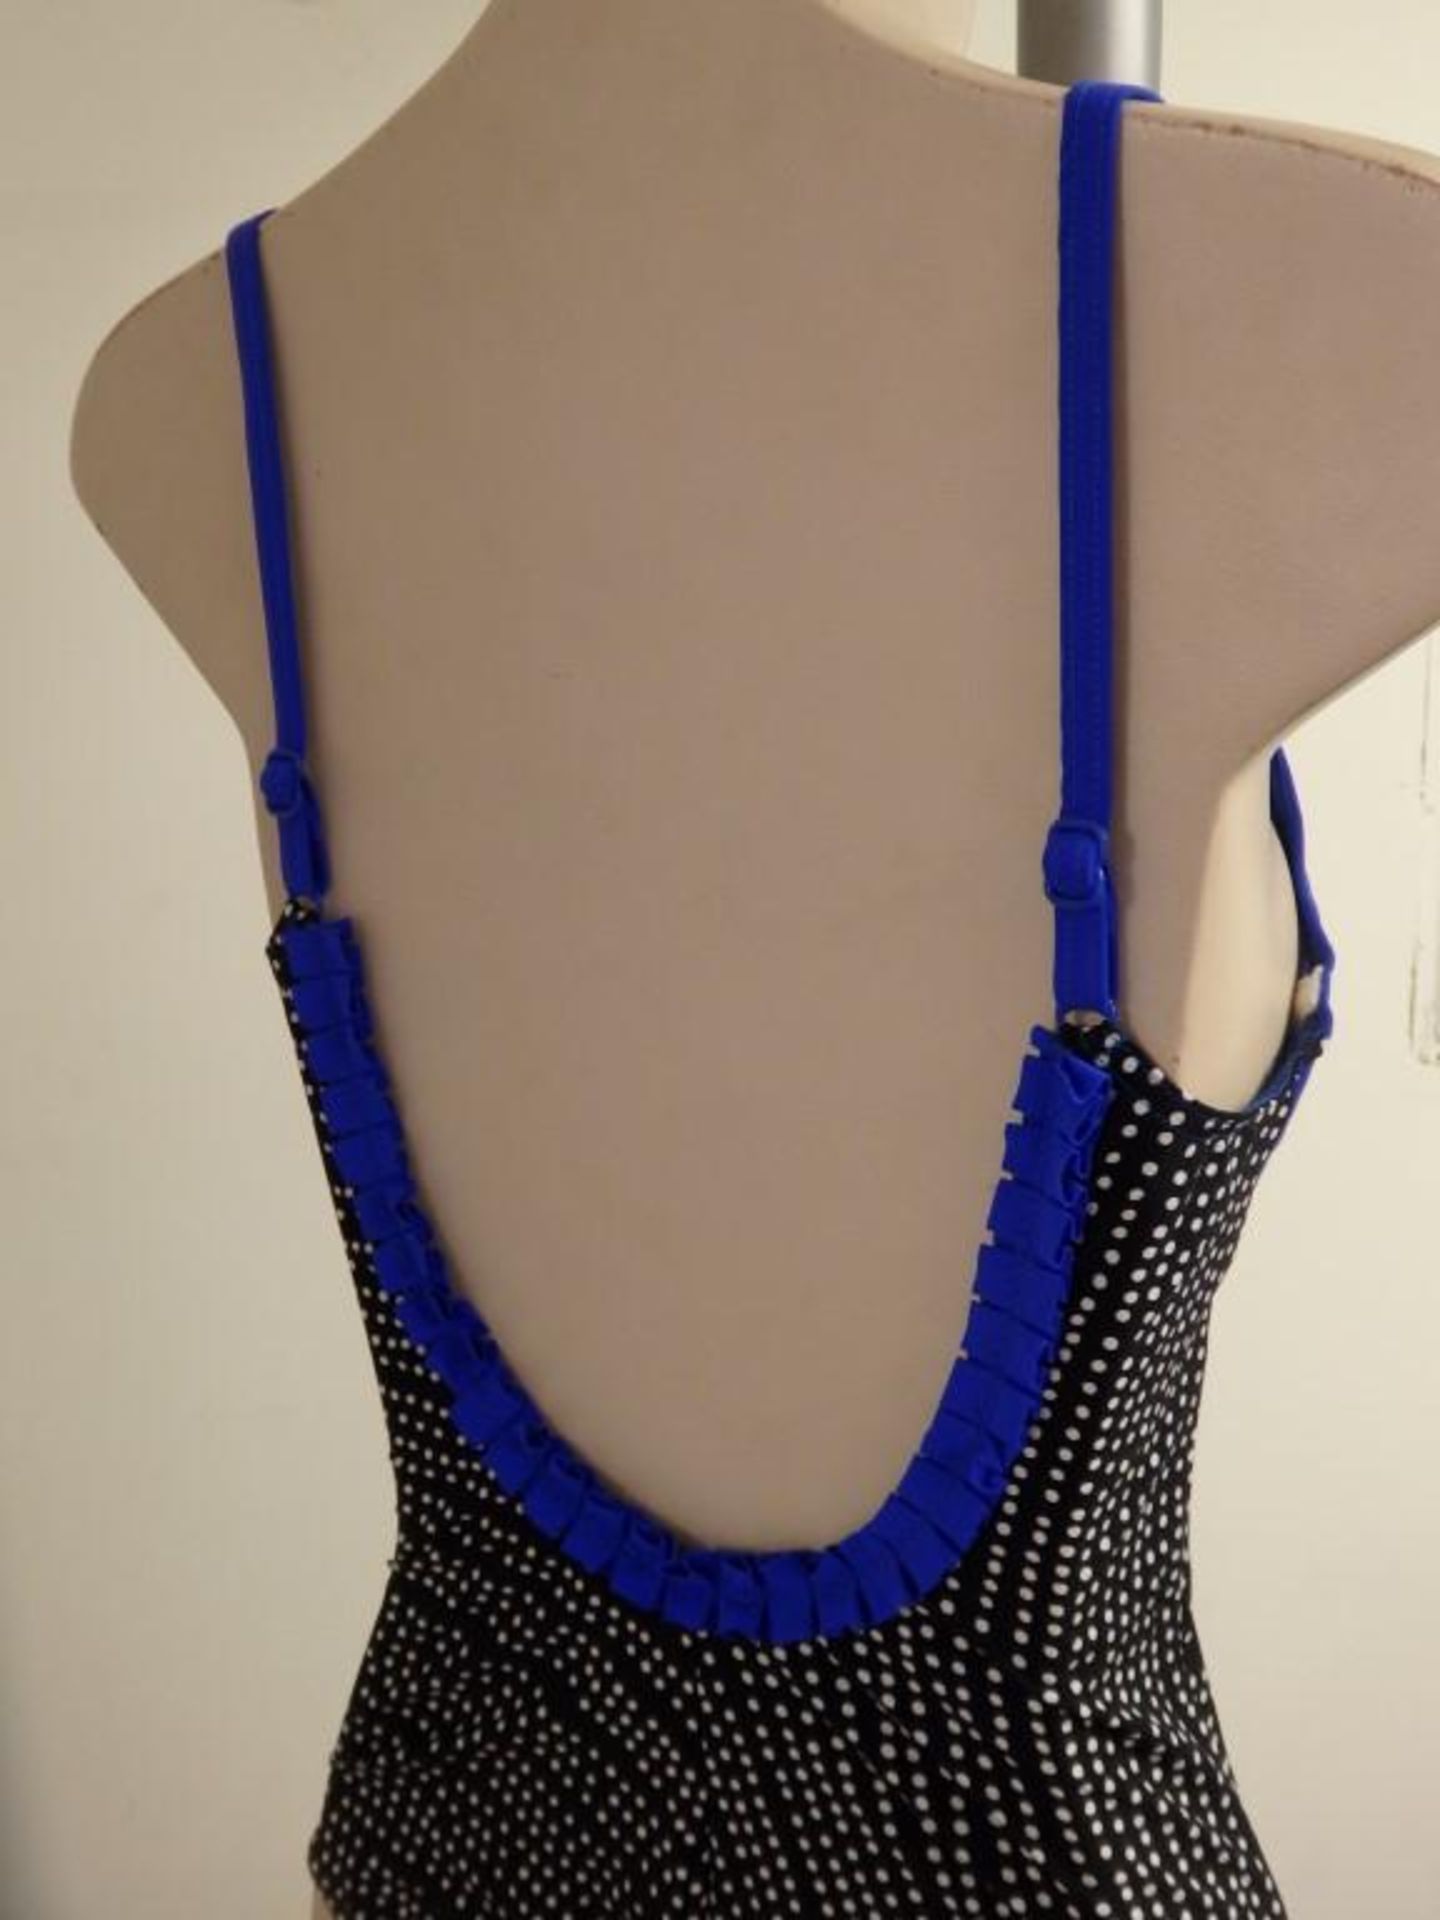 1 x Rasurel - Black Polka dot with royal blue trim & frill Tobago Swimsuit - B21039 - Size 2C - UK 3 - Image 2 of 8